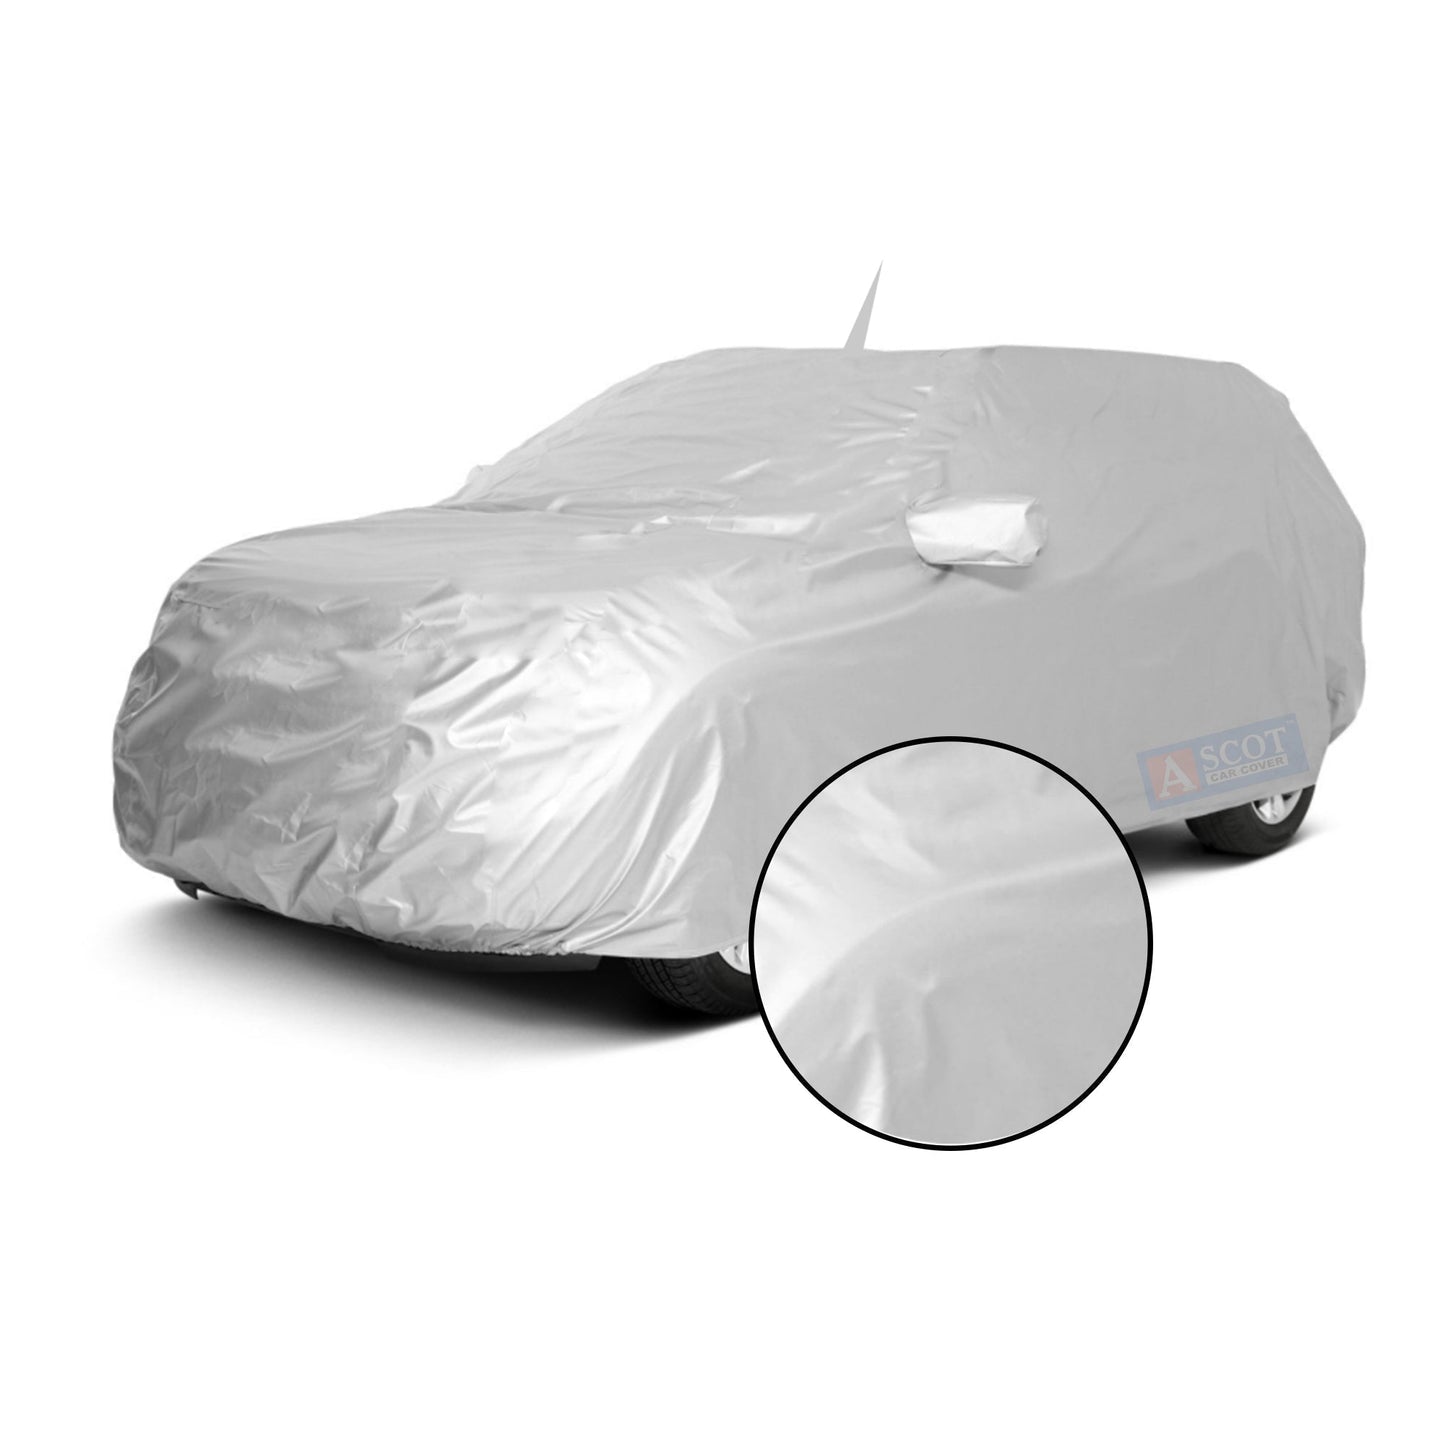 Ascot Honda Brio Car Body Cover Dust Proof, Trippel Stitched